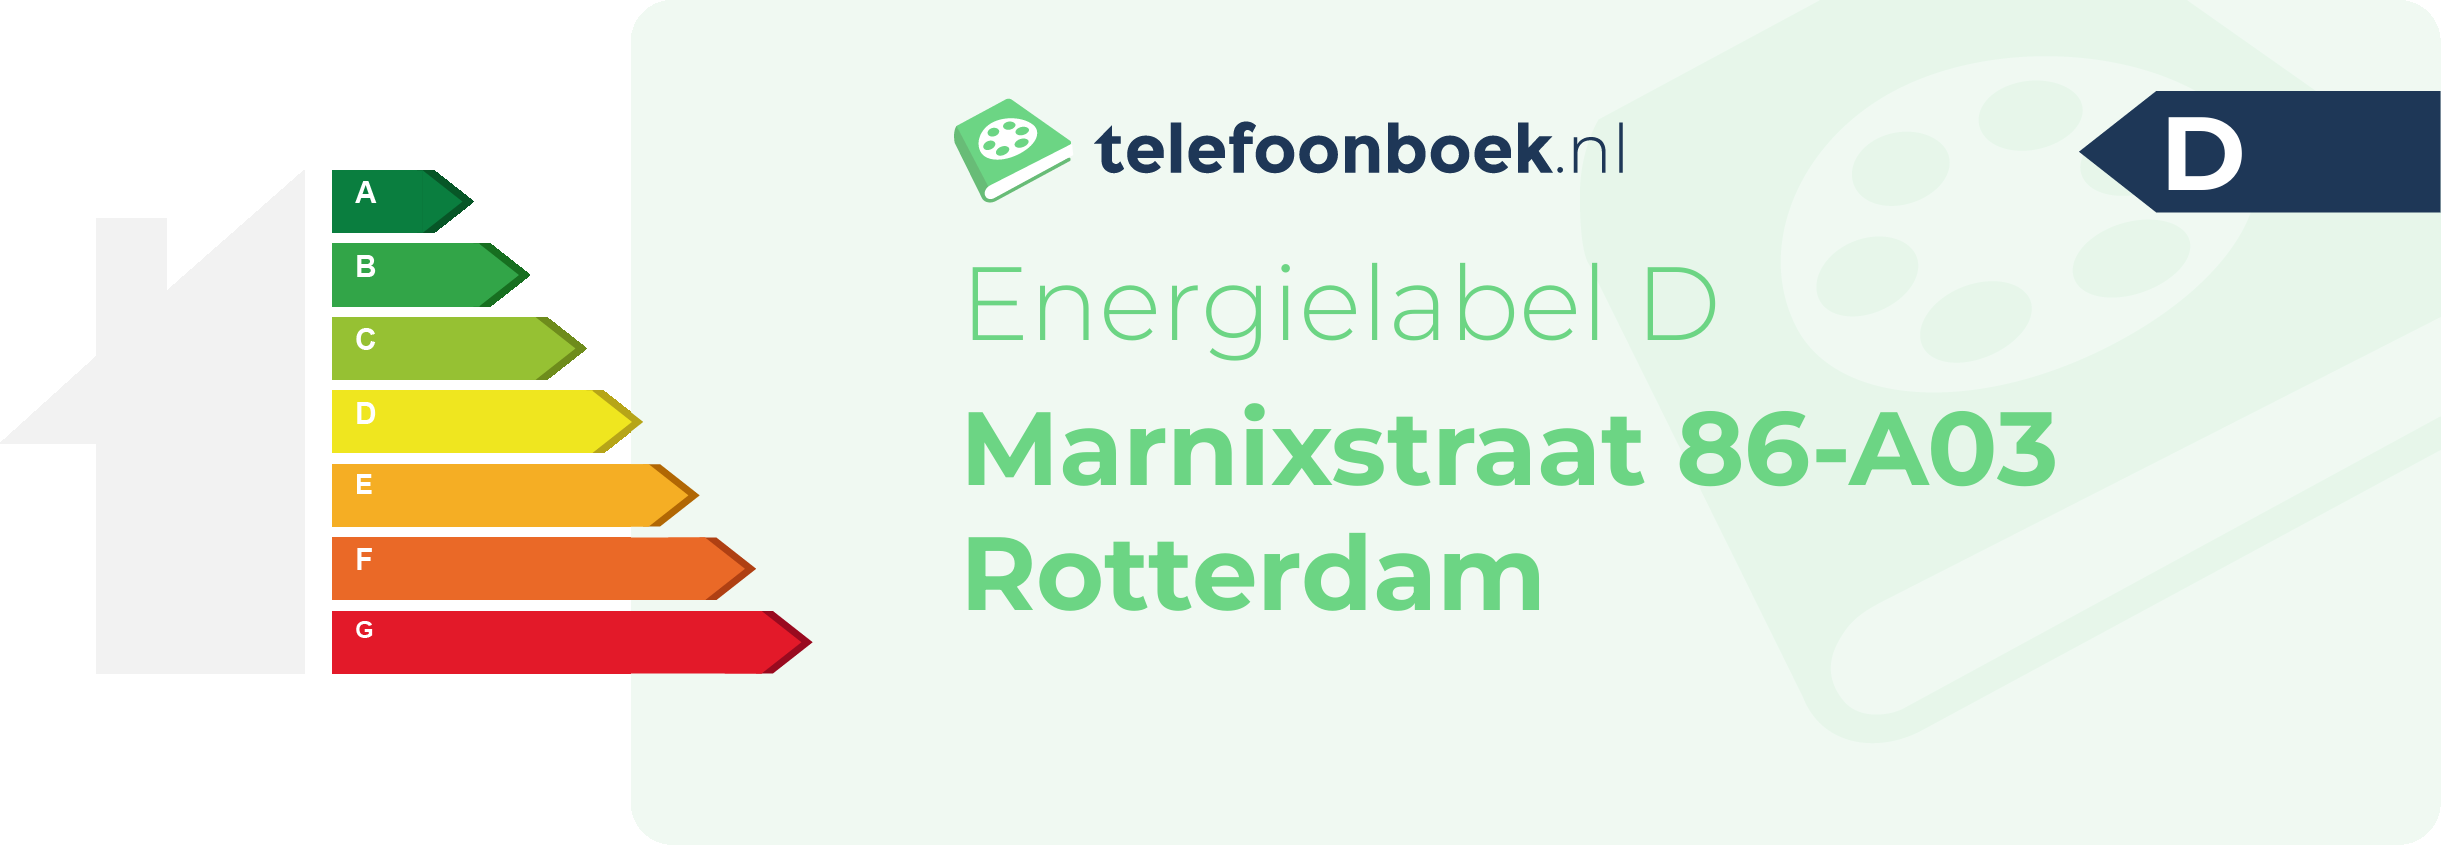 Energielabel Marnixstraat 86-A03 Rotterdam